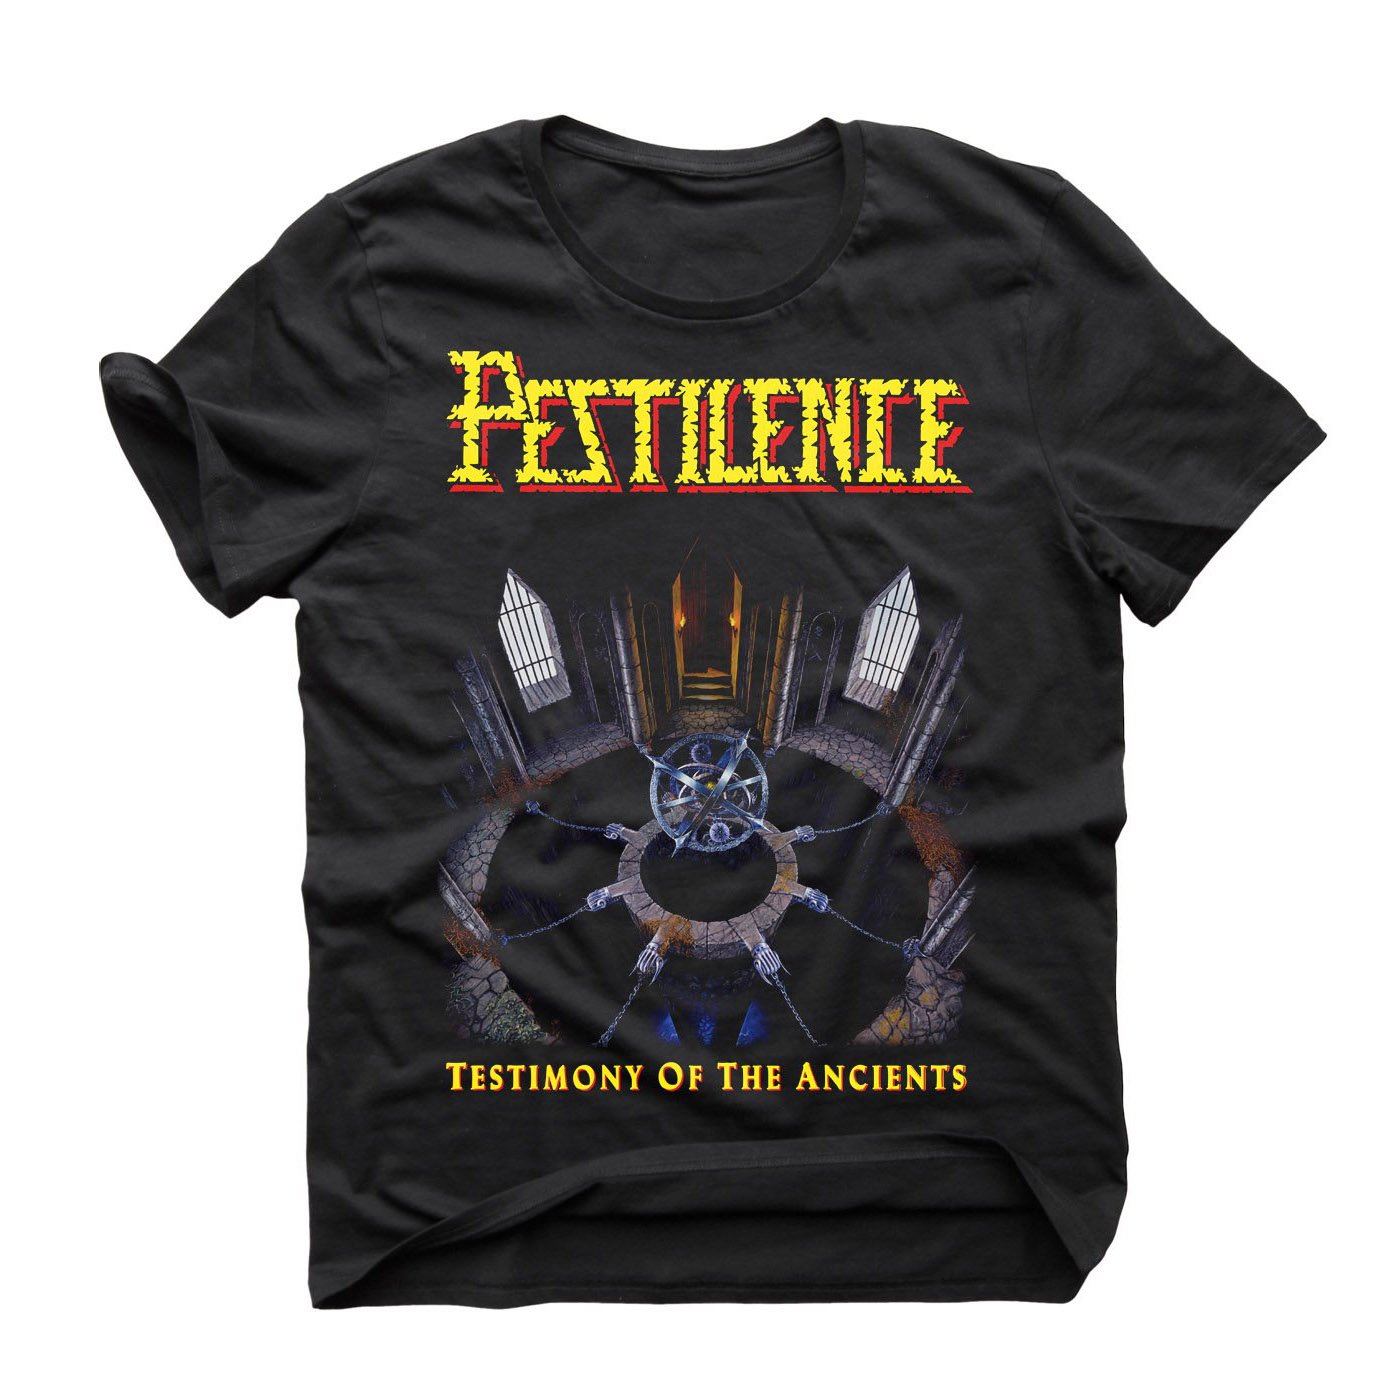 Pestilence "Testimony Of The Ancients" T shirt